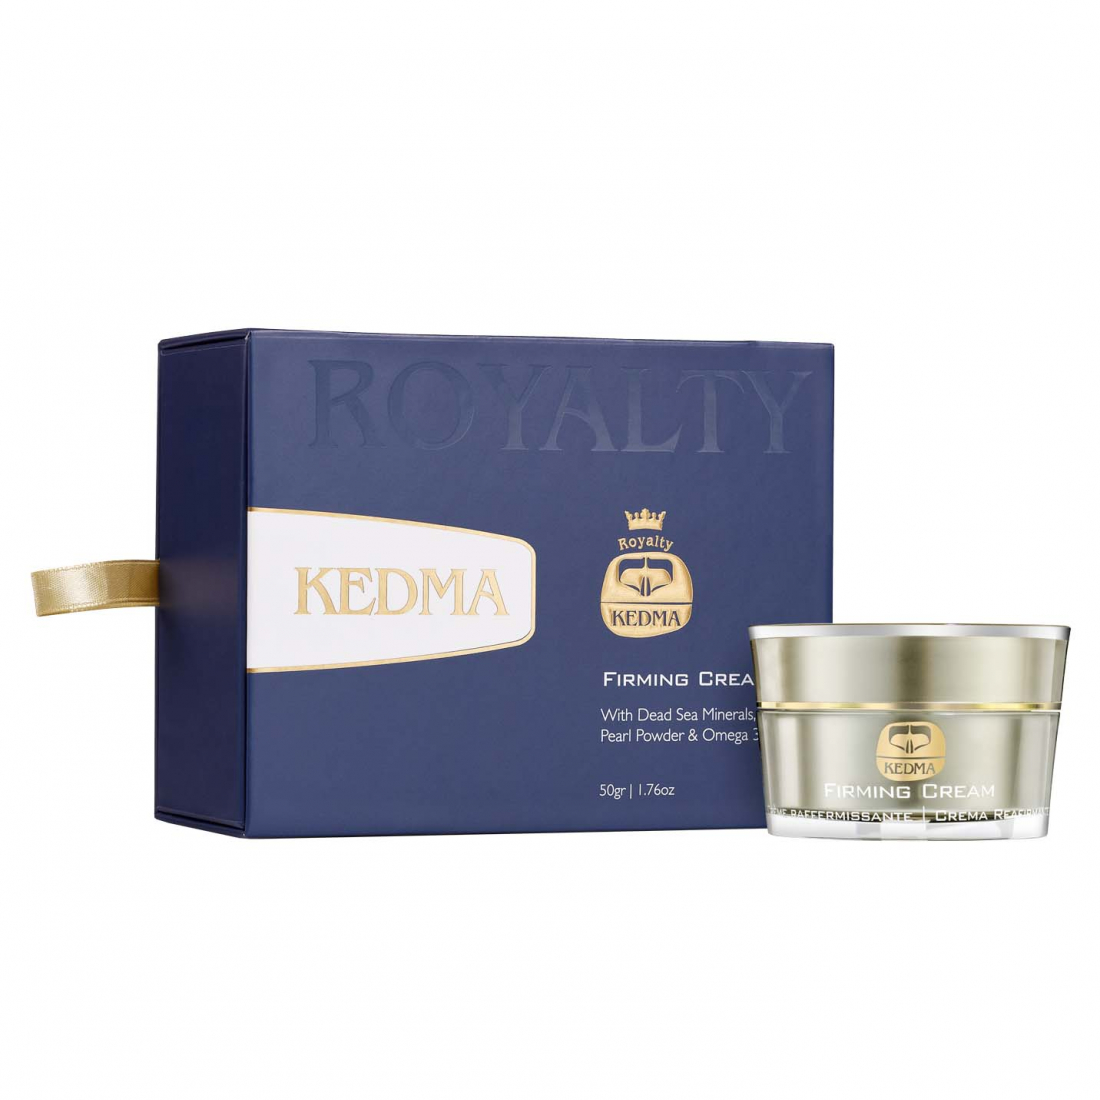 'Royalty Dead Sea Minerals, Pearl Powder & Omega 3' Firming Cream - 50 g